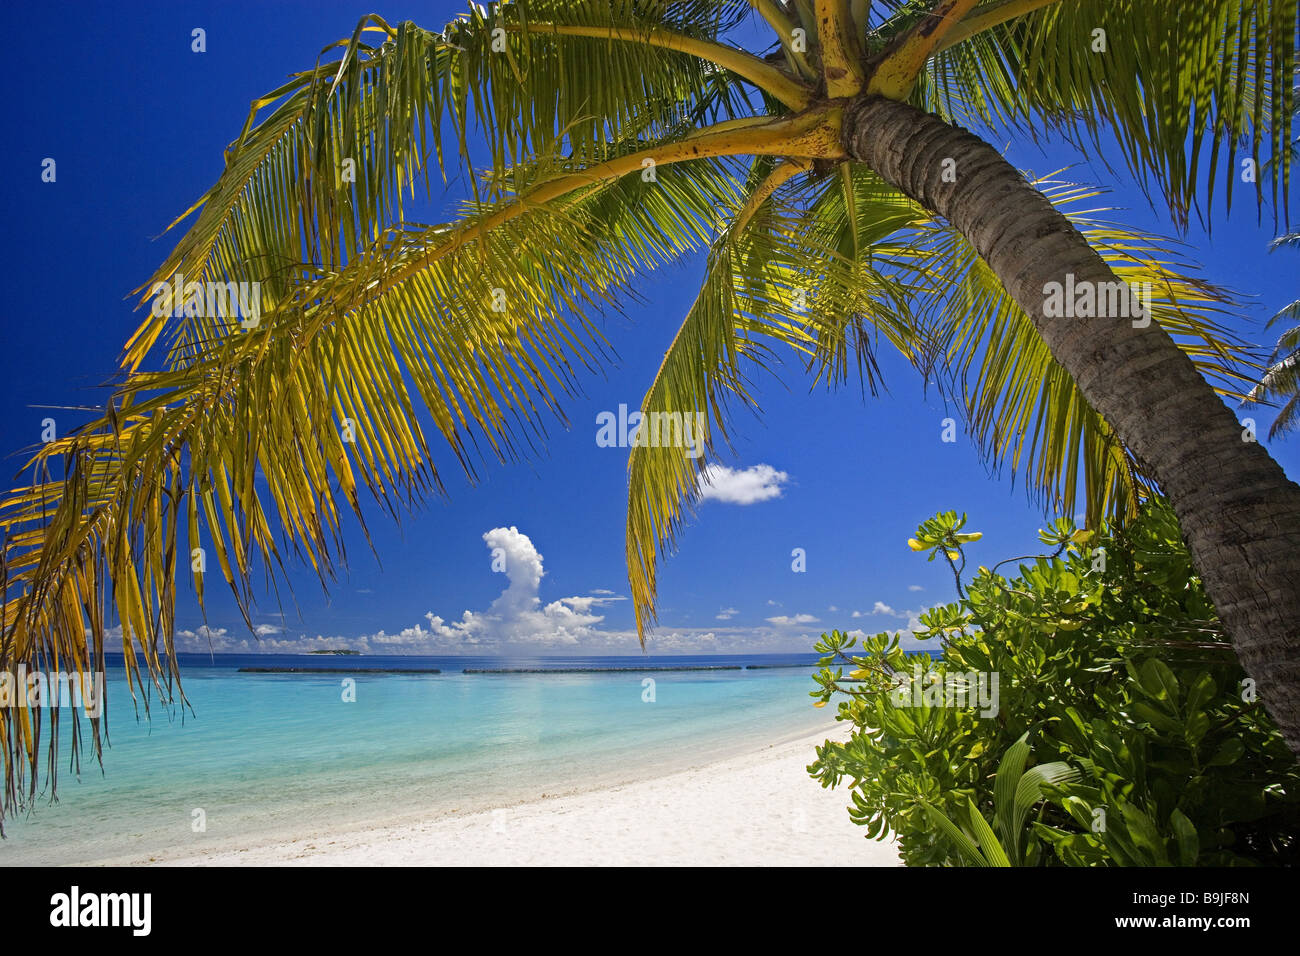 Malediven Malé Atolls Meer Palmenstrand Detail Insel Staat Insel Malediven-Insel Strand sandig Nordstrand palm einsame Stille Stockfoto